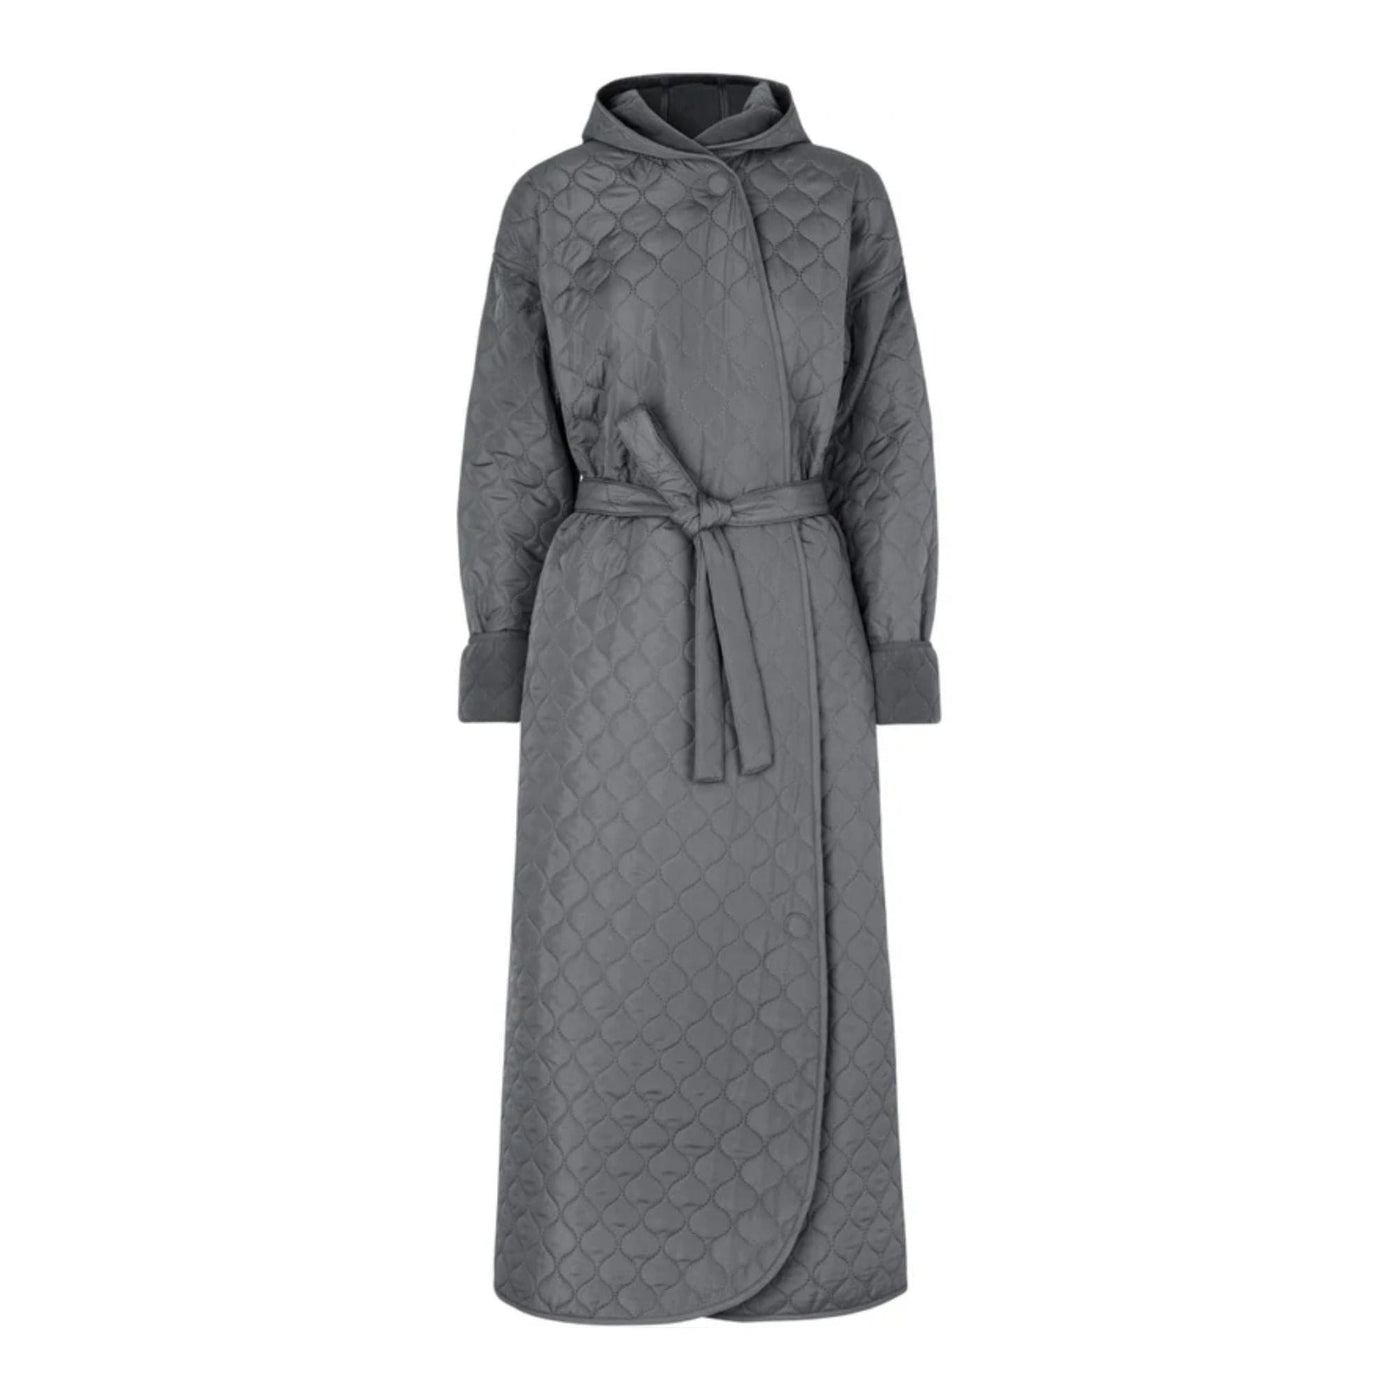 nordbaek coats jackets anthracite grey small women s windy ocean outdoor bathrobe